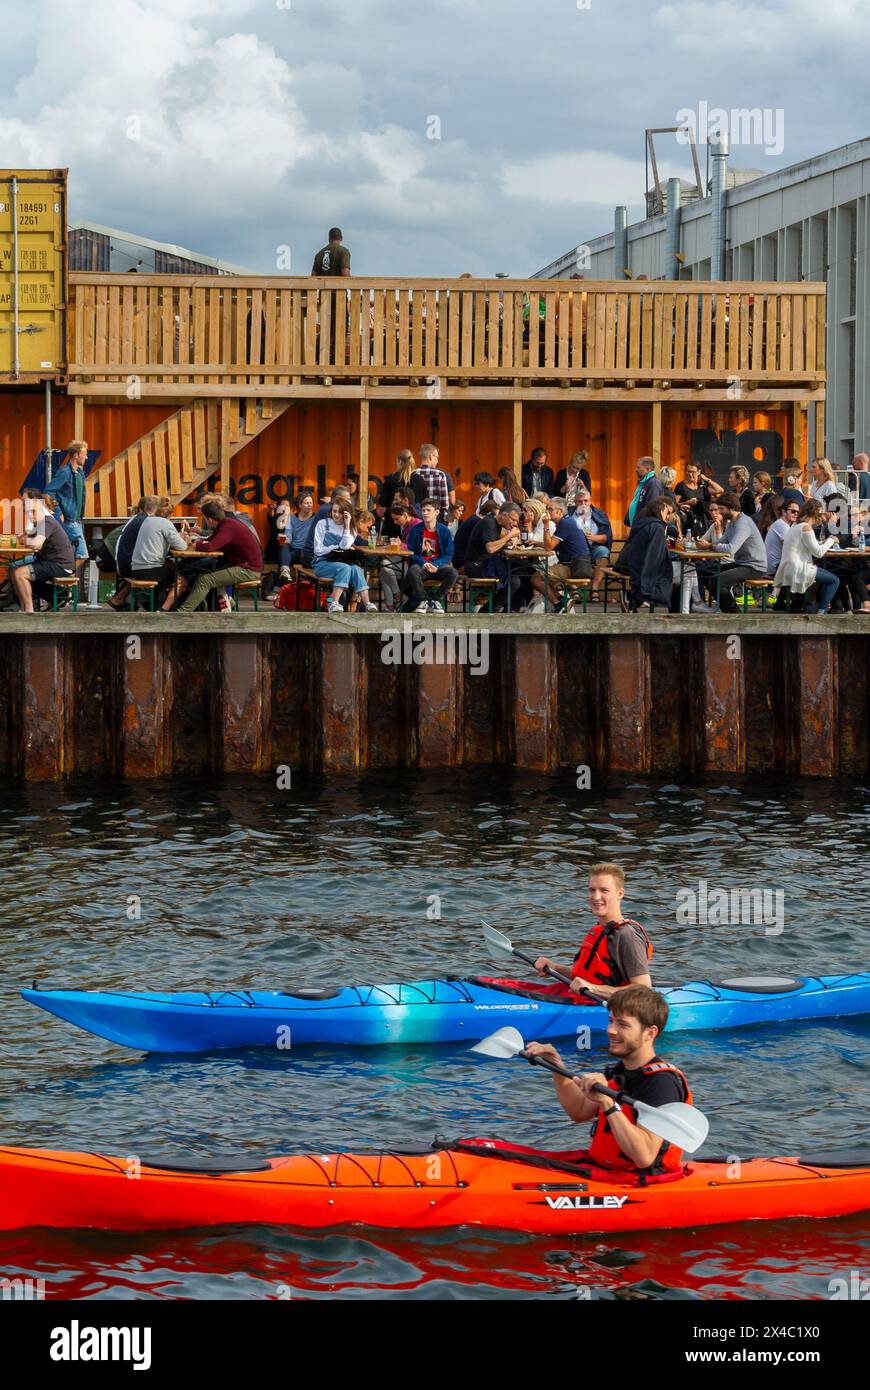 Kopenhagen, Dänemark, große Menschenmenge, Getränke in der lokalen Bar 'Papiroen' am River's Edge, Männer Kajak fahren Stockfoto